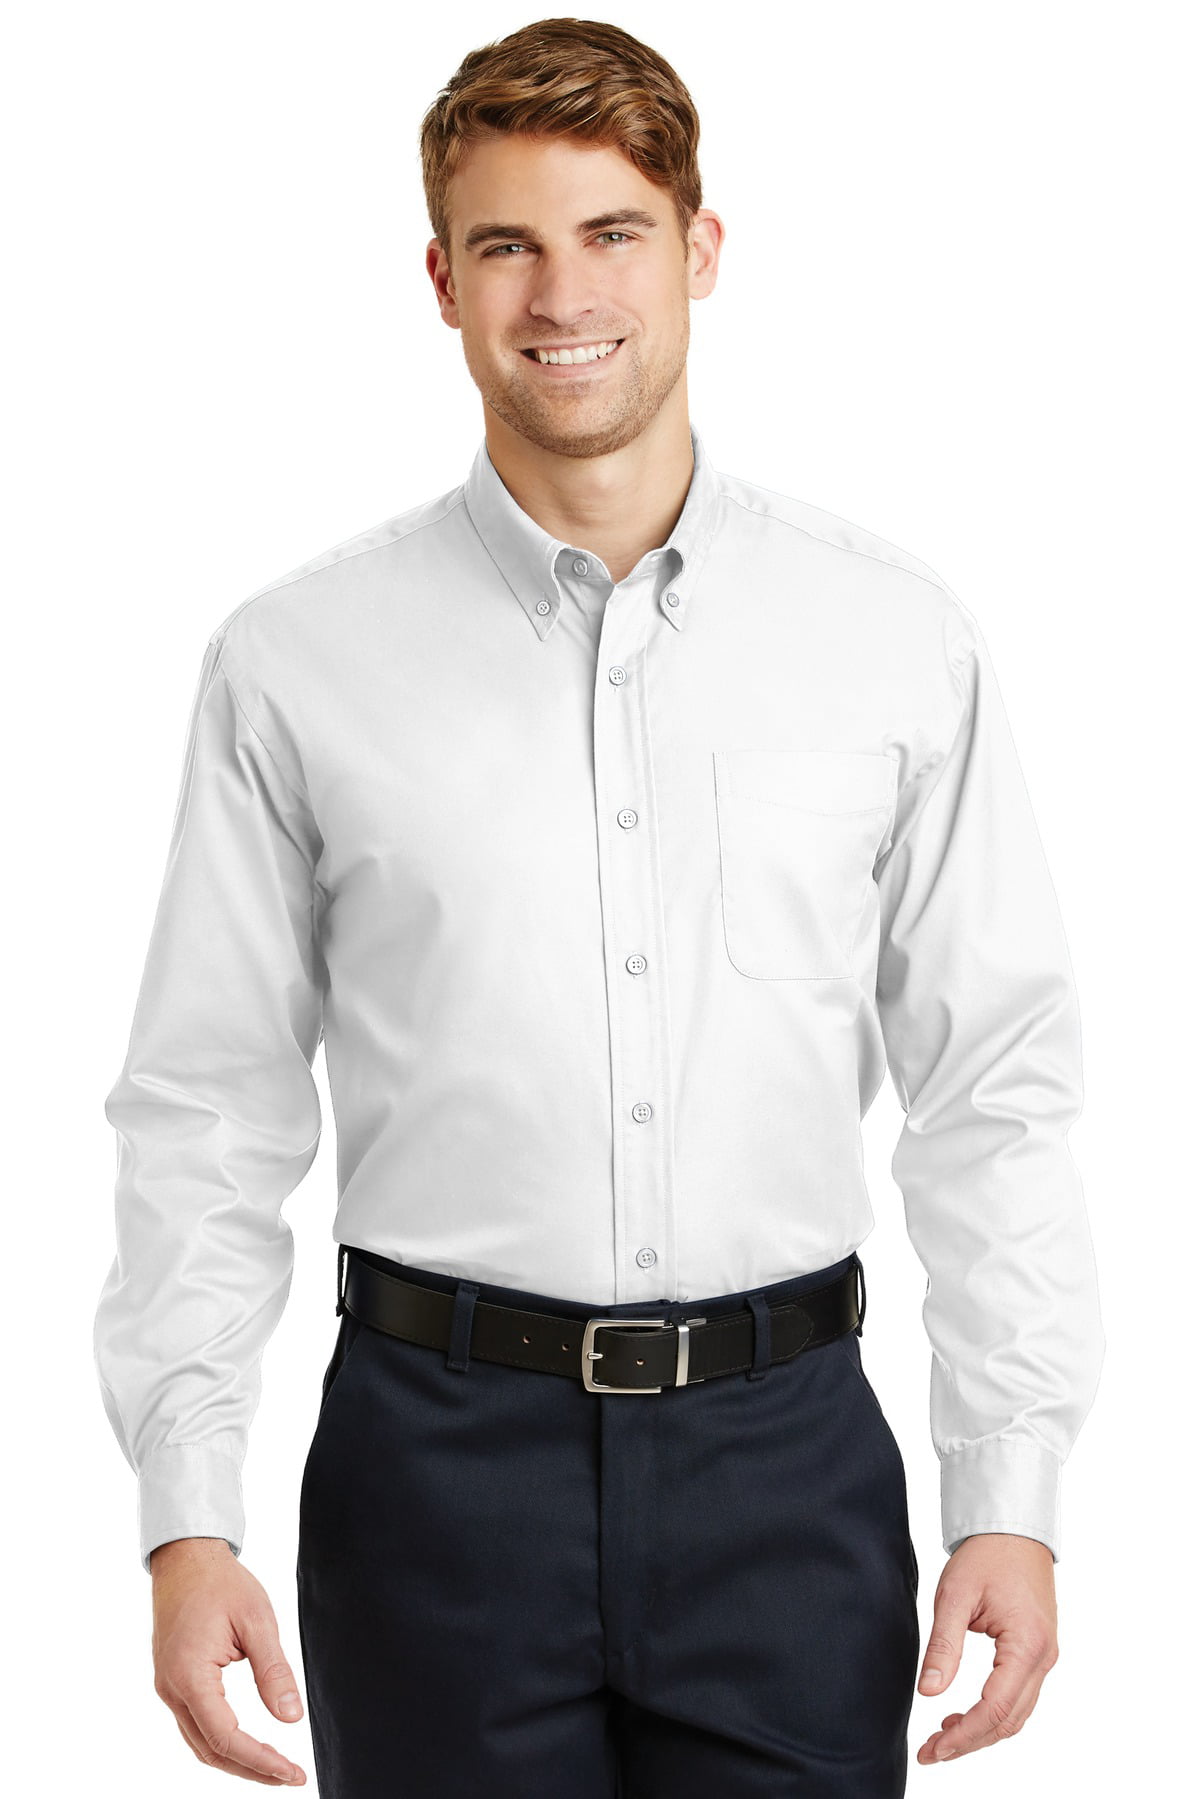 CornerStone - Long Sleeve SuperPro Twill Shirt - Walmart.com - Walmart.com